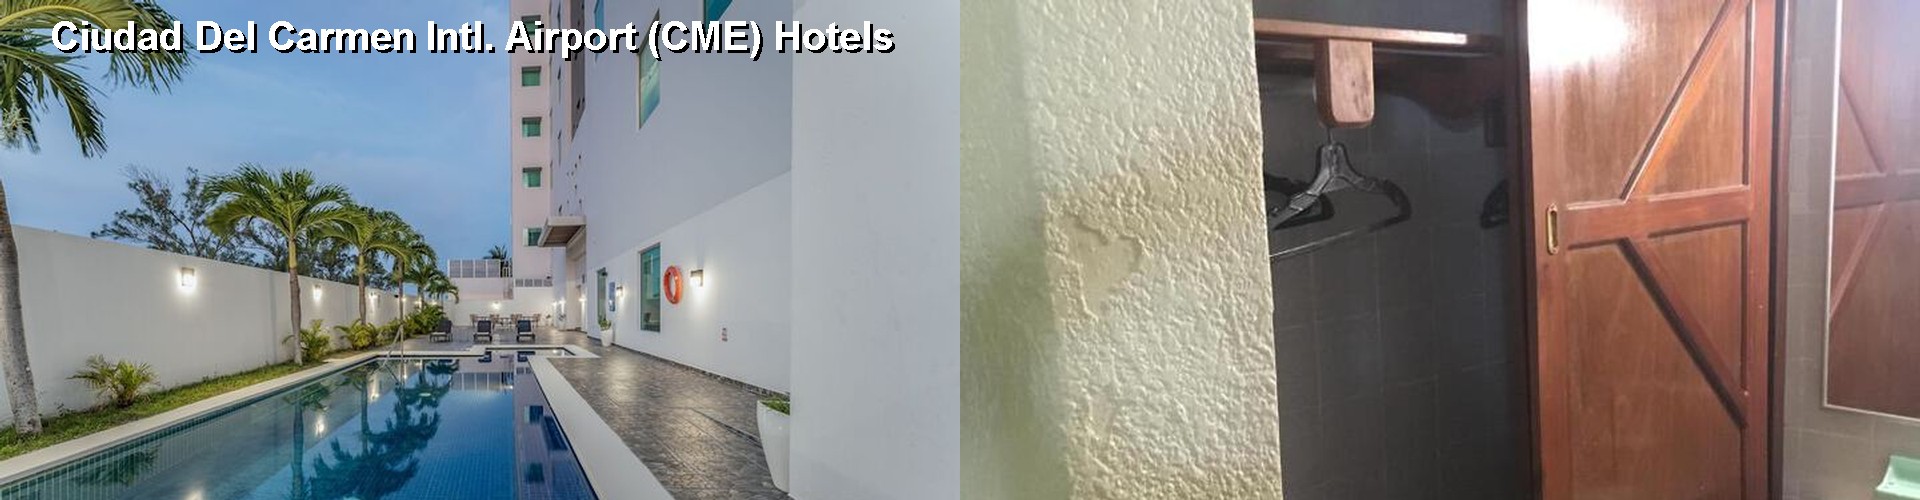 5 Best Hotels near Ciudad Del Carmen Intl. Airport (CME)